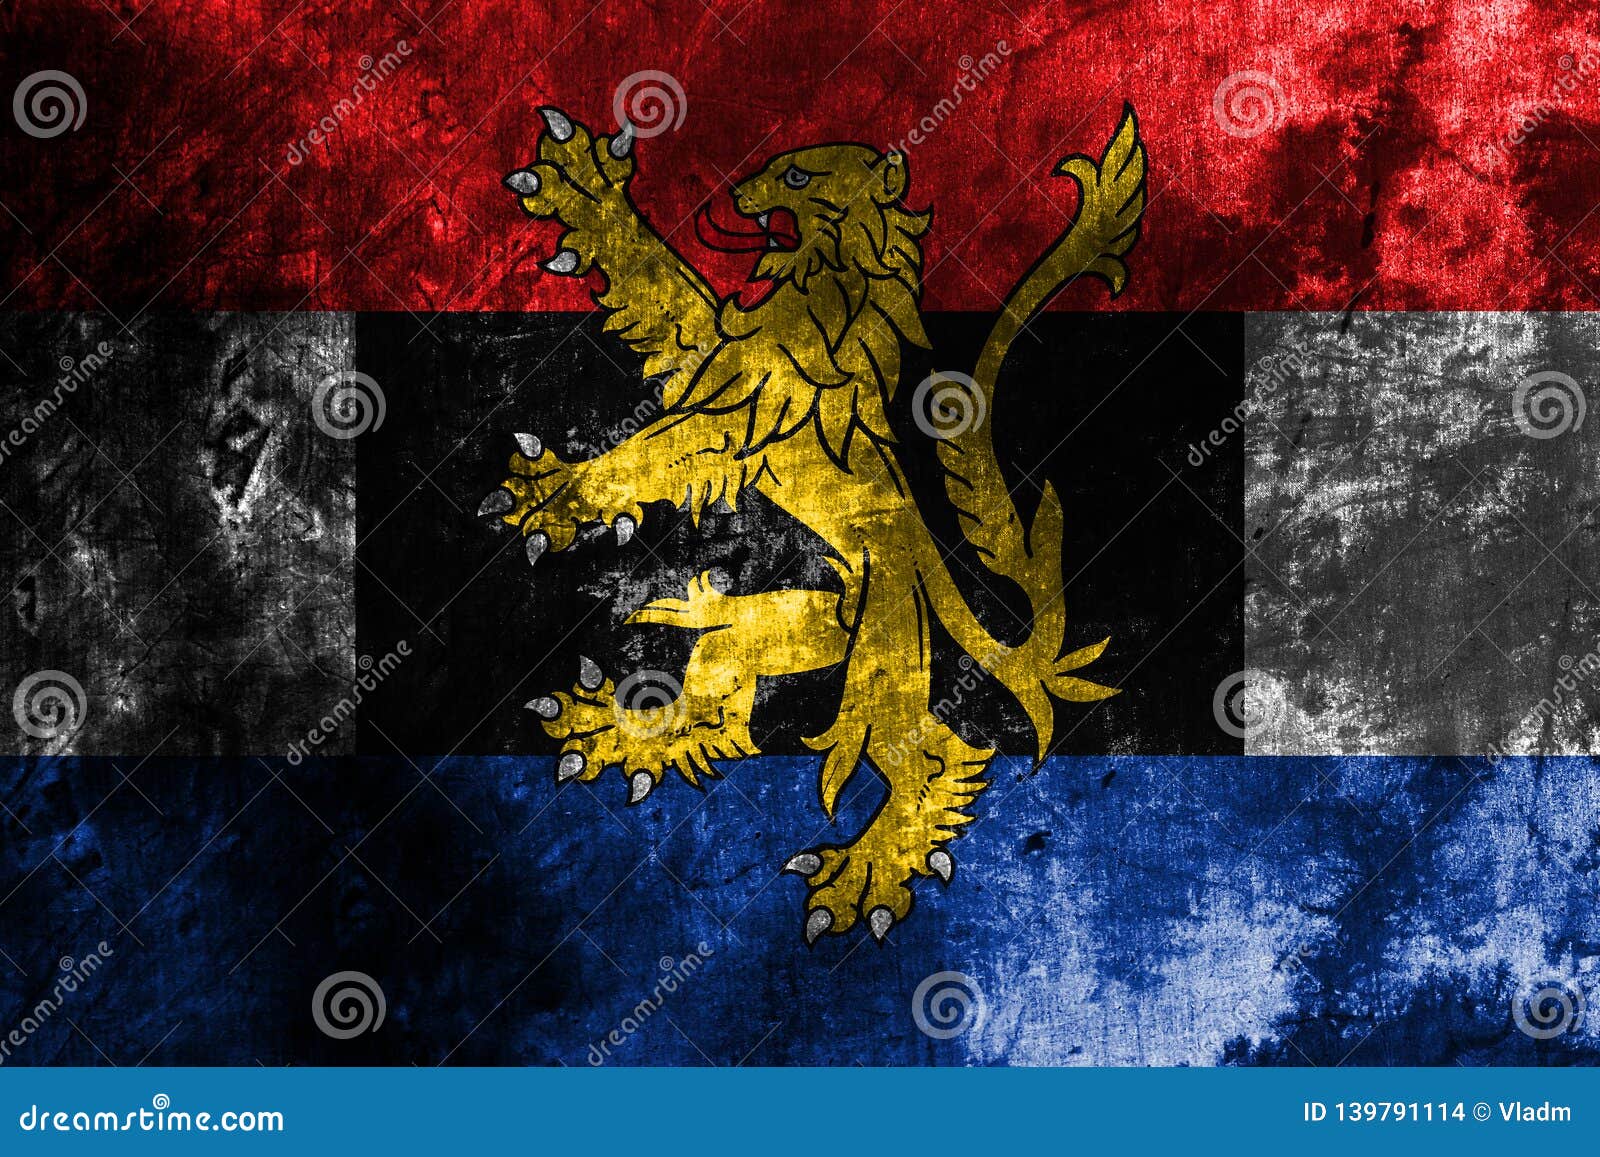 benelux grunge flag, politico-economic union of belgium, netherlands, luxembourg